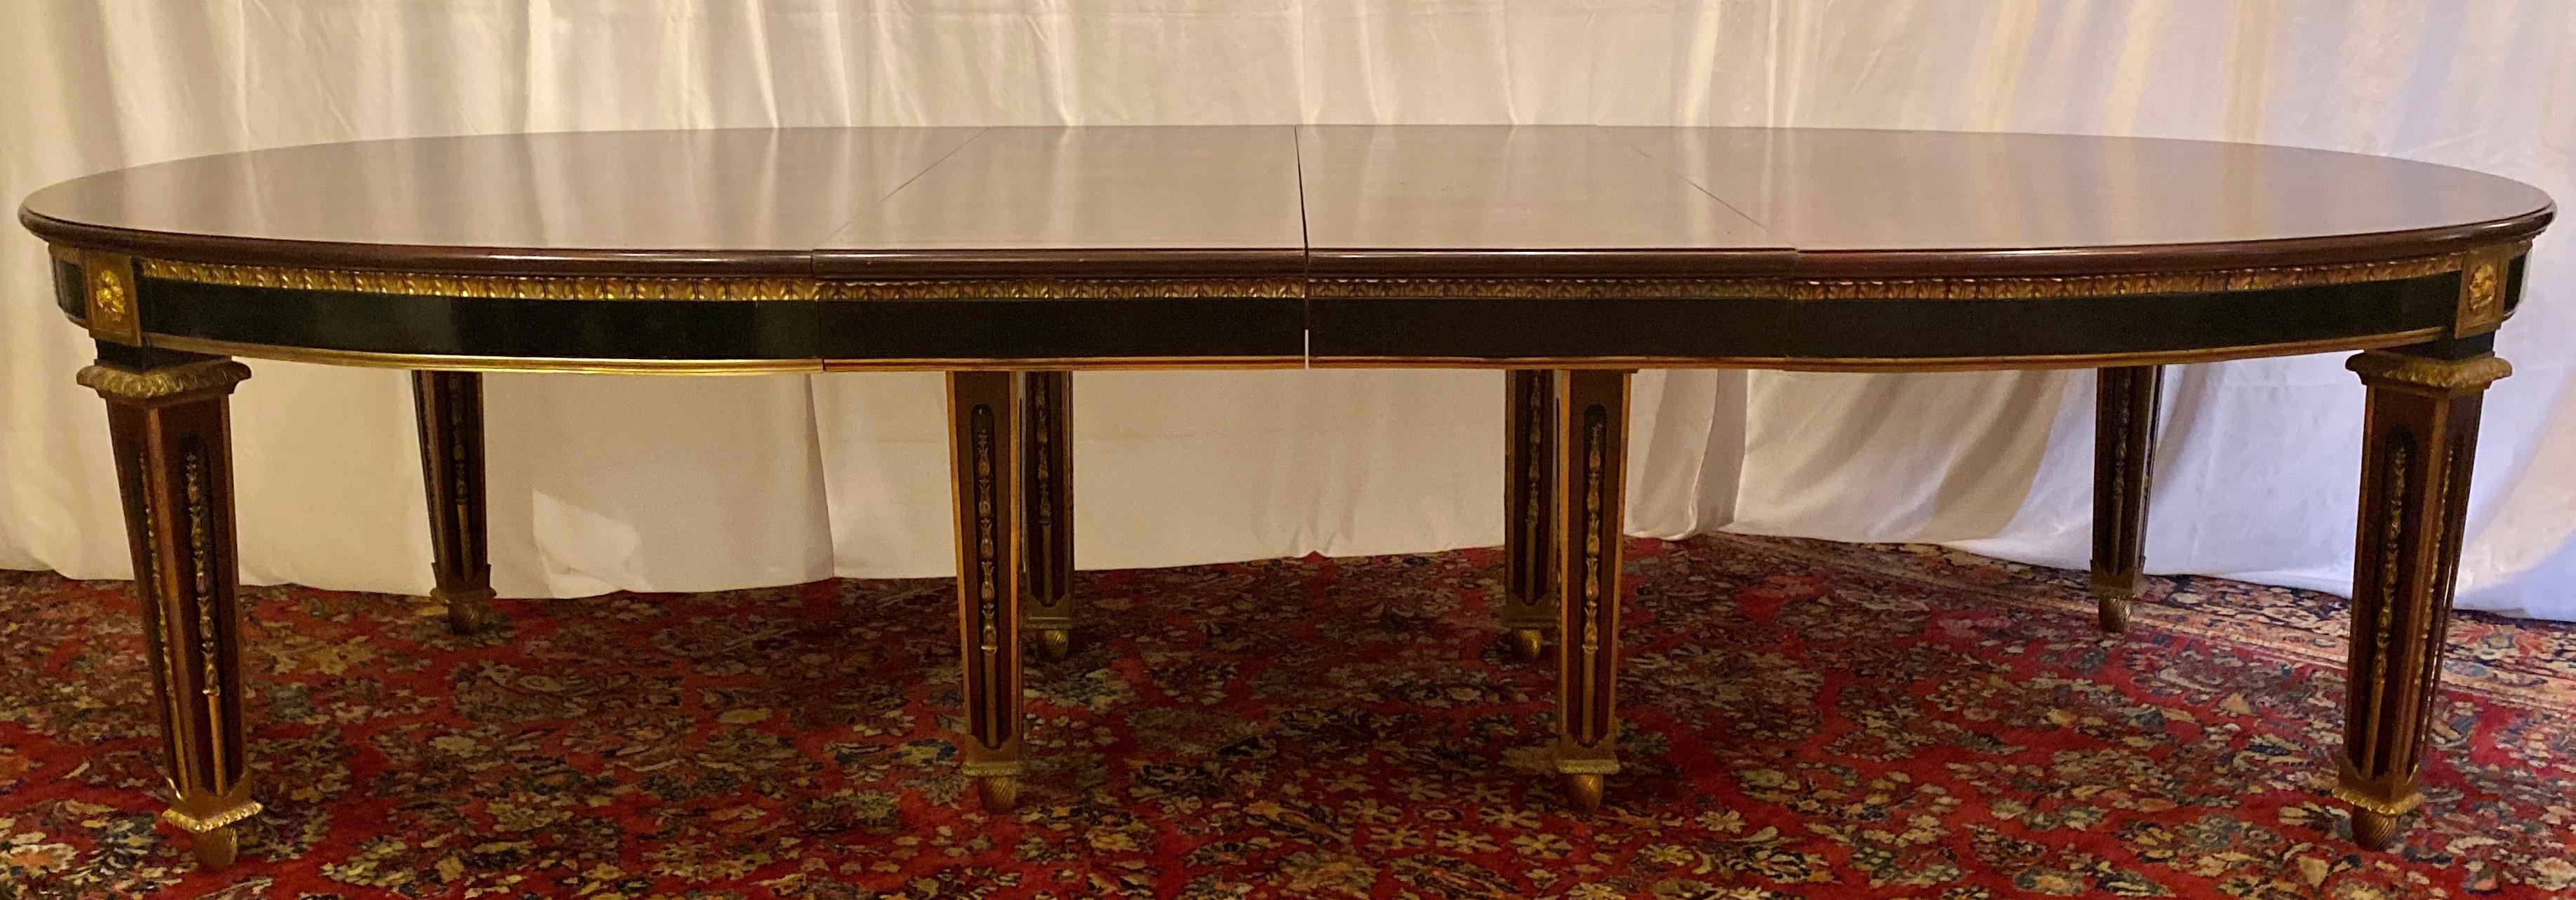 Antique French Louis XVI Ormolu Mounted Mahogany Dining Table, circa 1860-1870 5